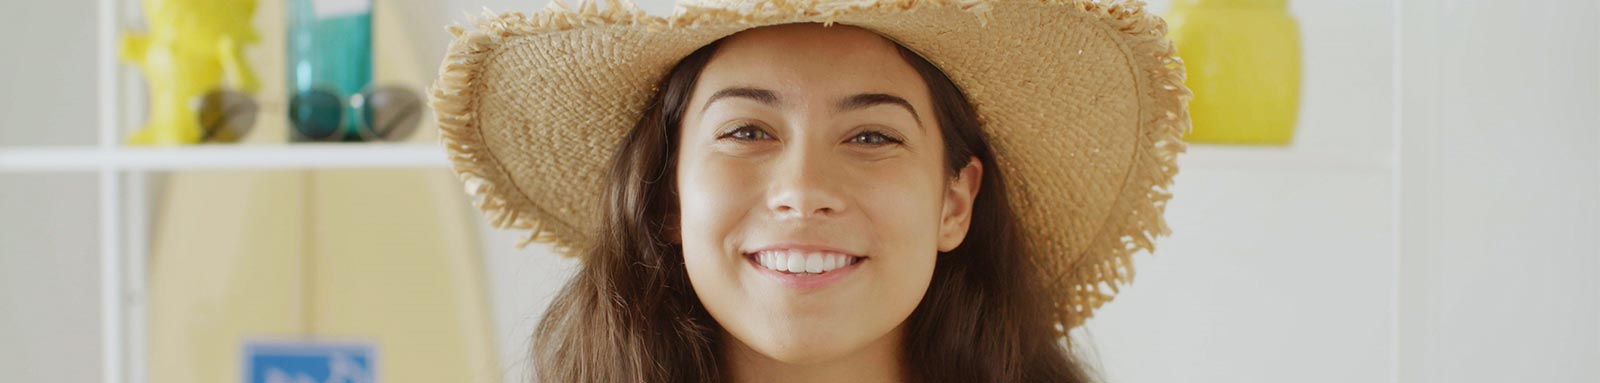 Girl wearing a straw hat